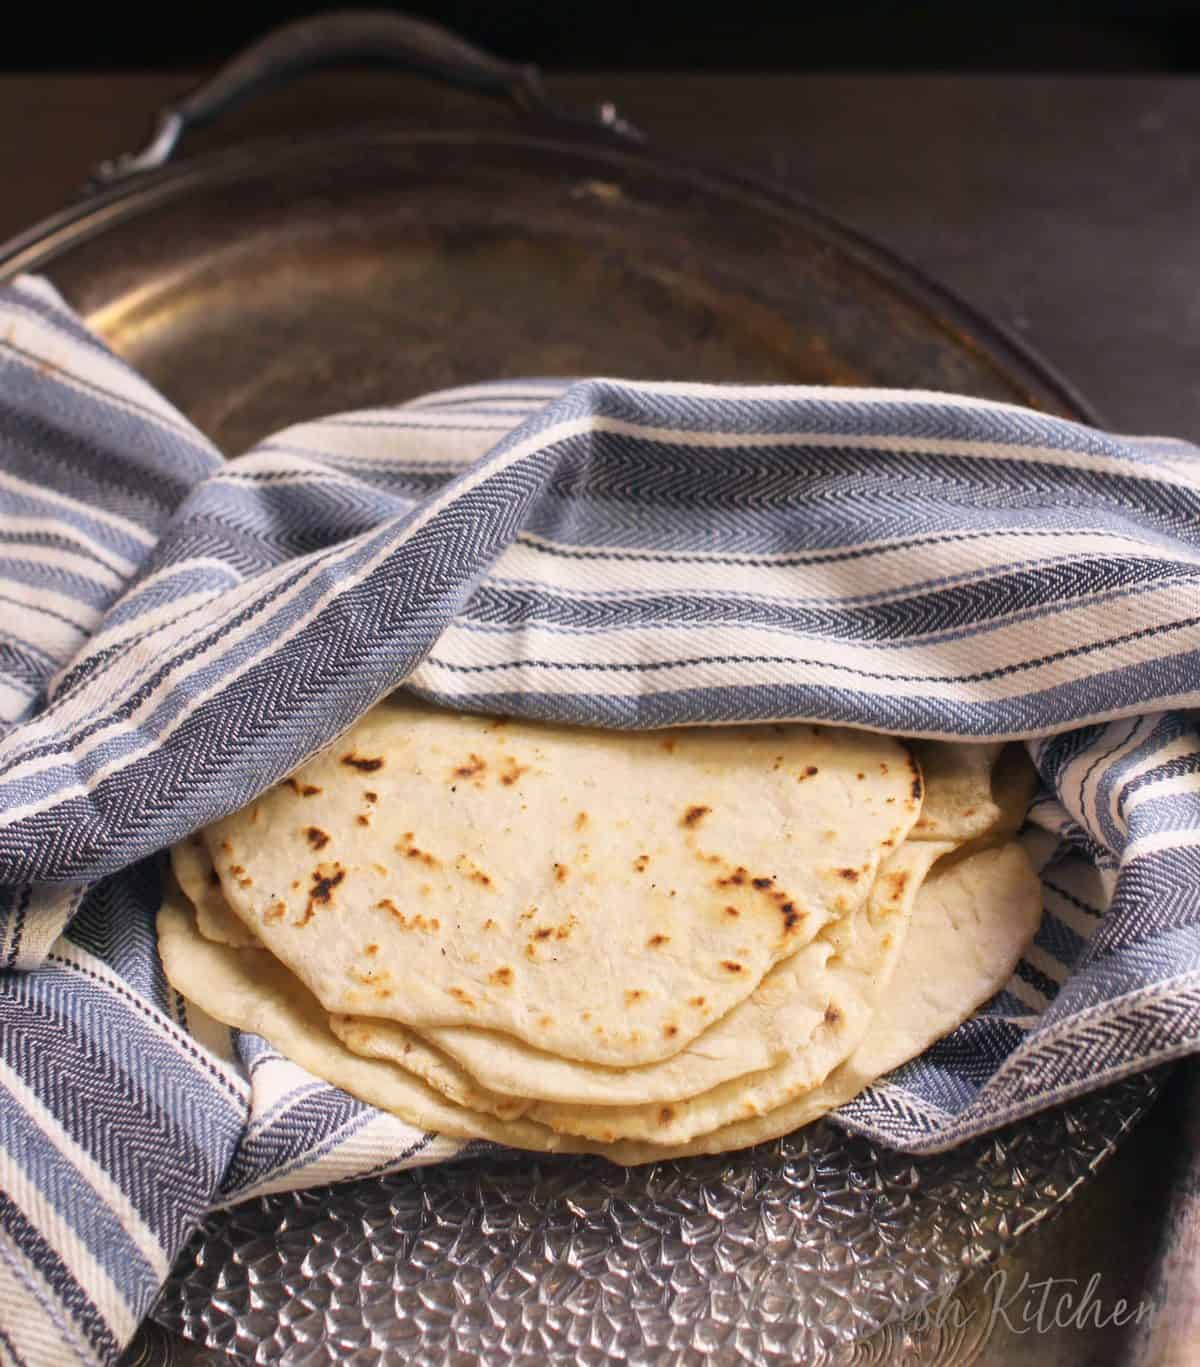 https://onedishkitchen.com/wp-content/uploads/2020/04/tortillas-one-dish-kitchen-1-1200x1367.jpg